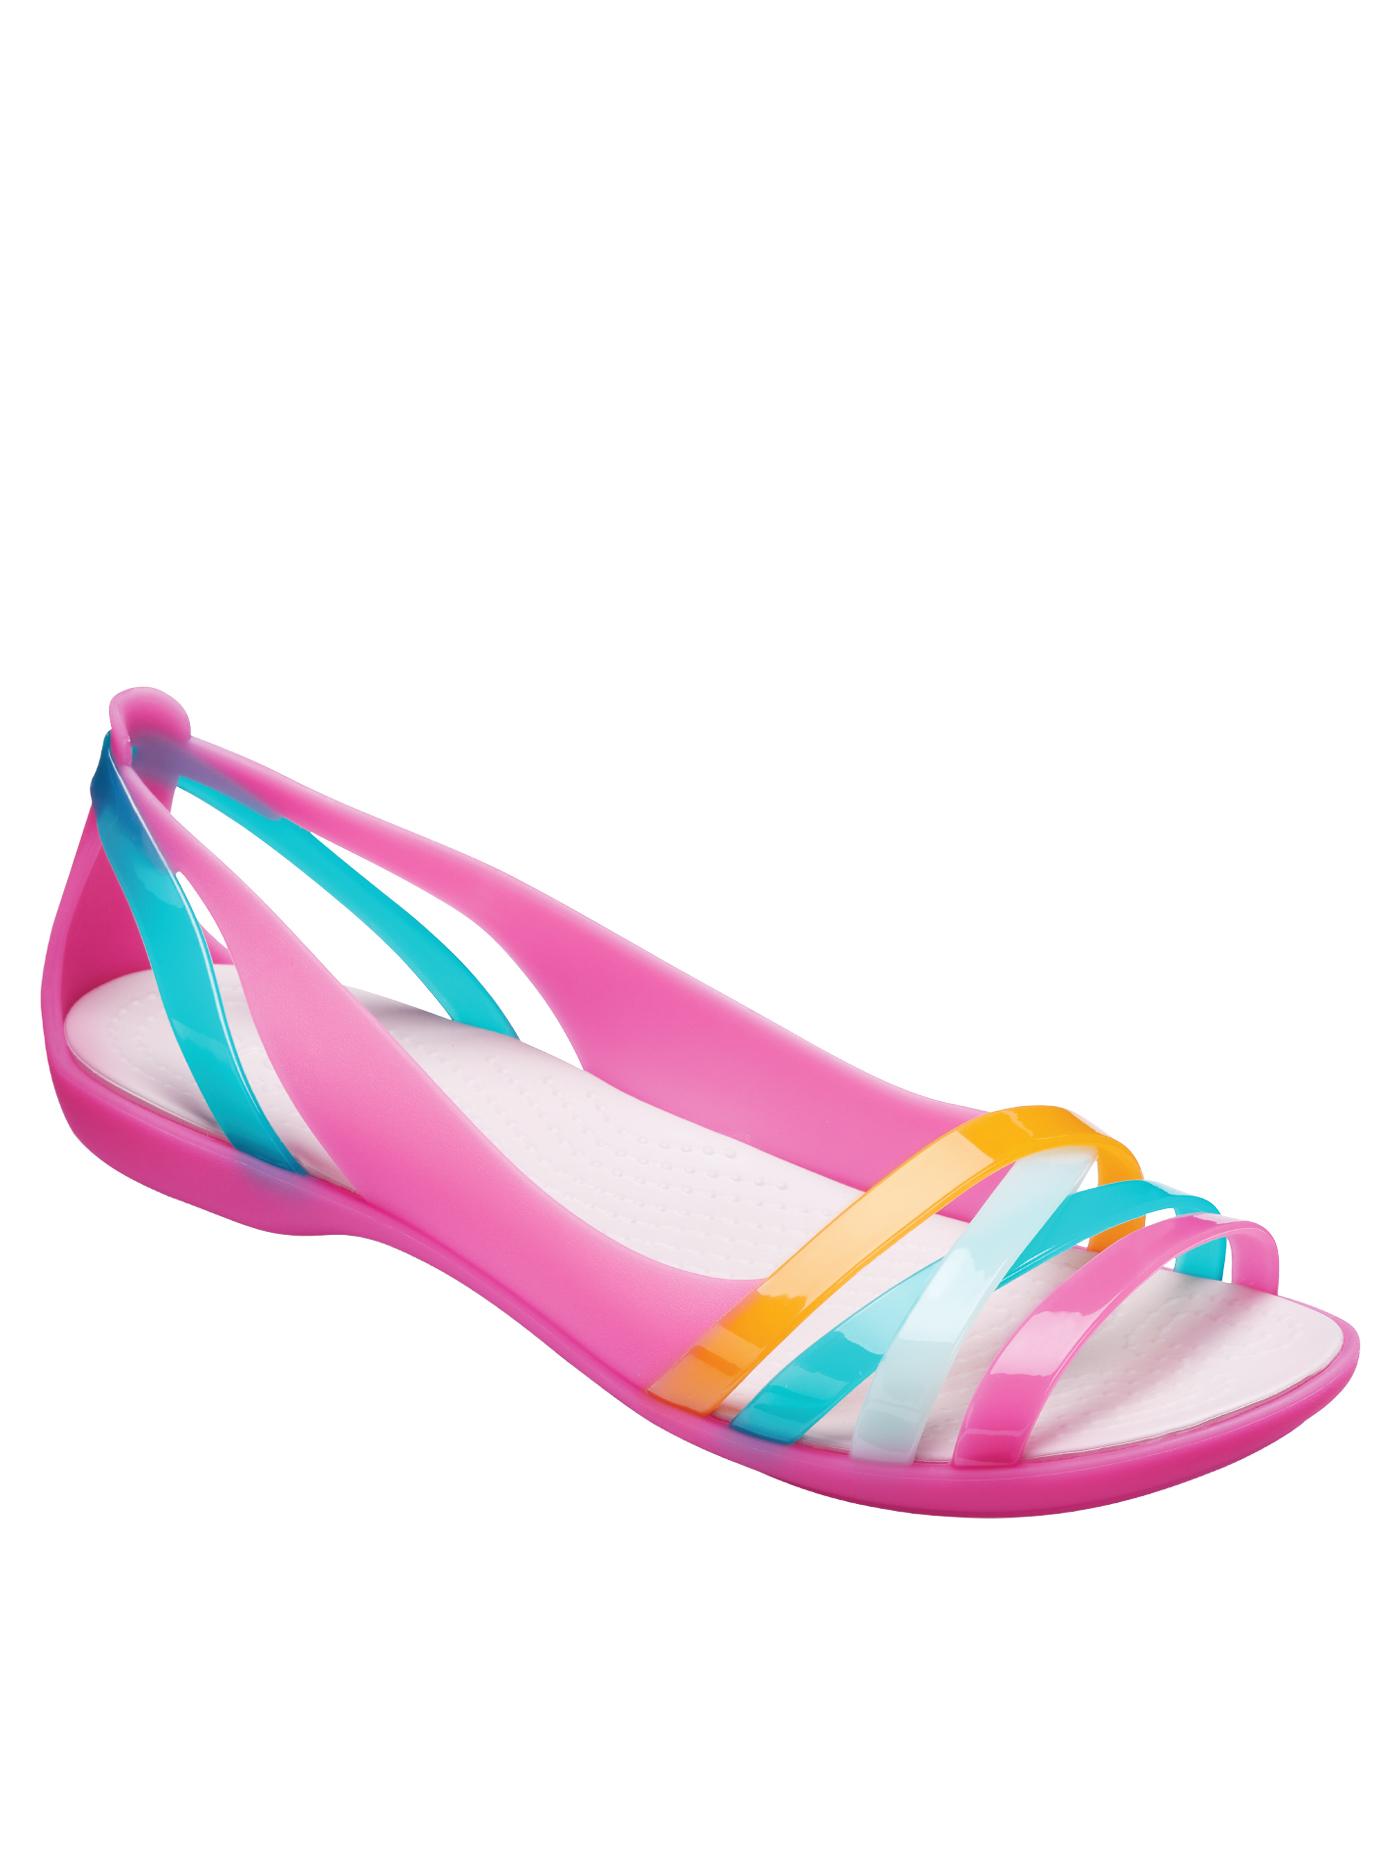 CROCS รองเท้าลำลองสำหรับผู้หญิง รุ่น Isabella Huarache 2 Flat ไซส์ W8  สี Paradise Pink - Rose Dust